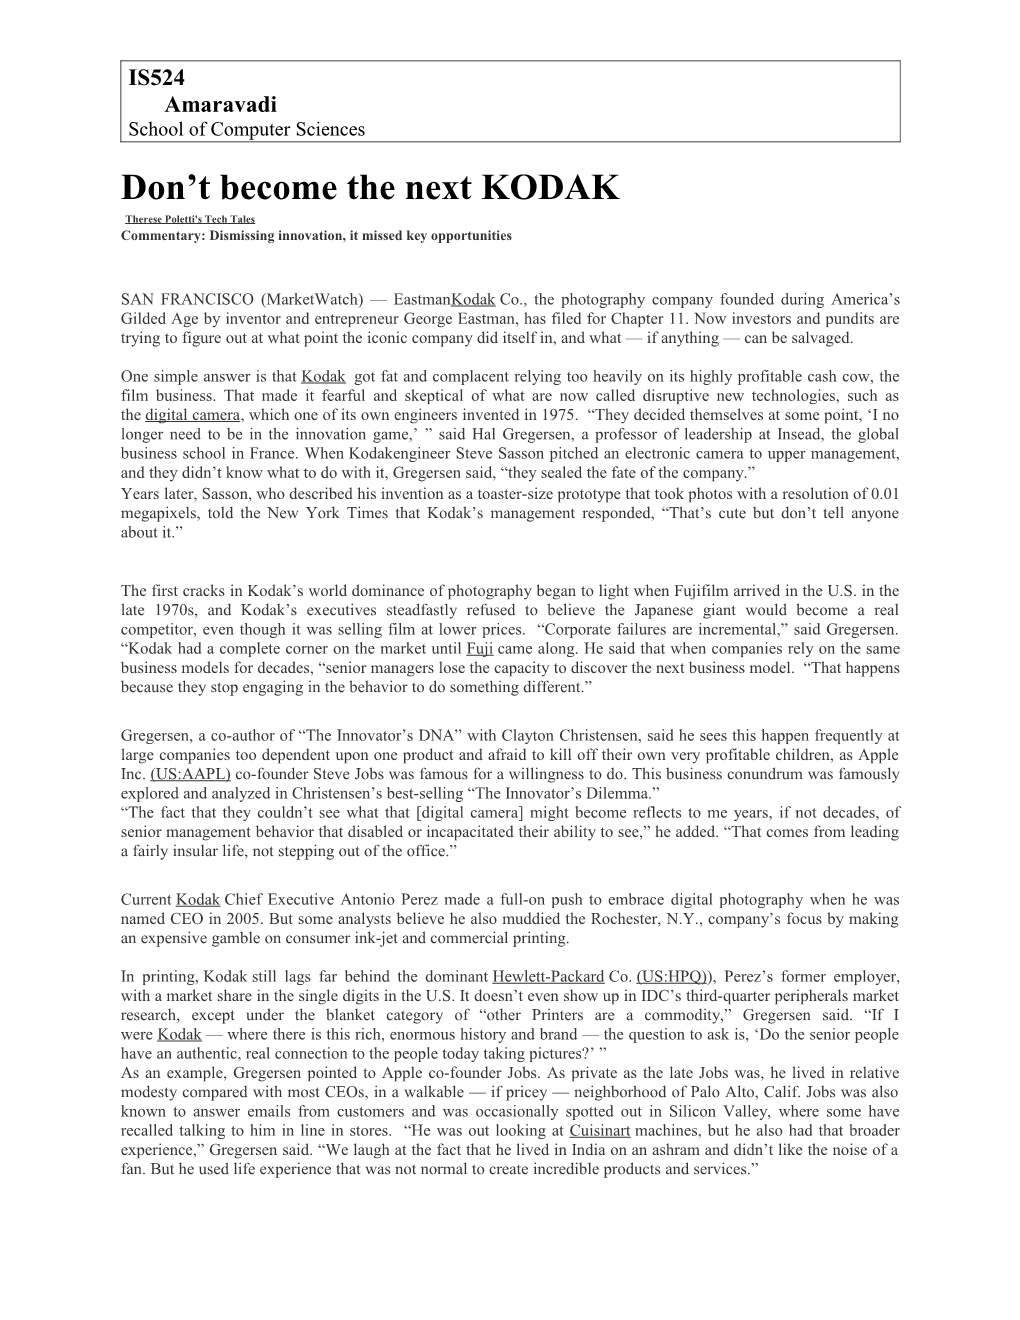 Don T Become the Next KODAK